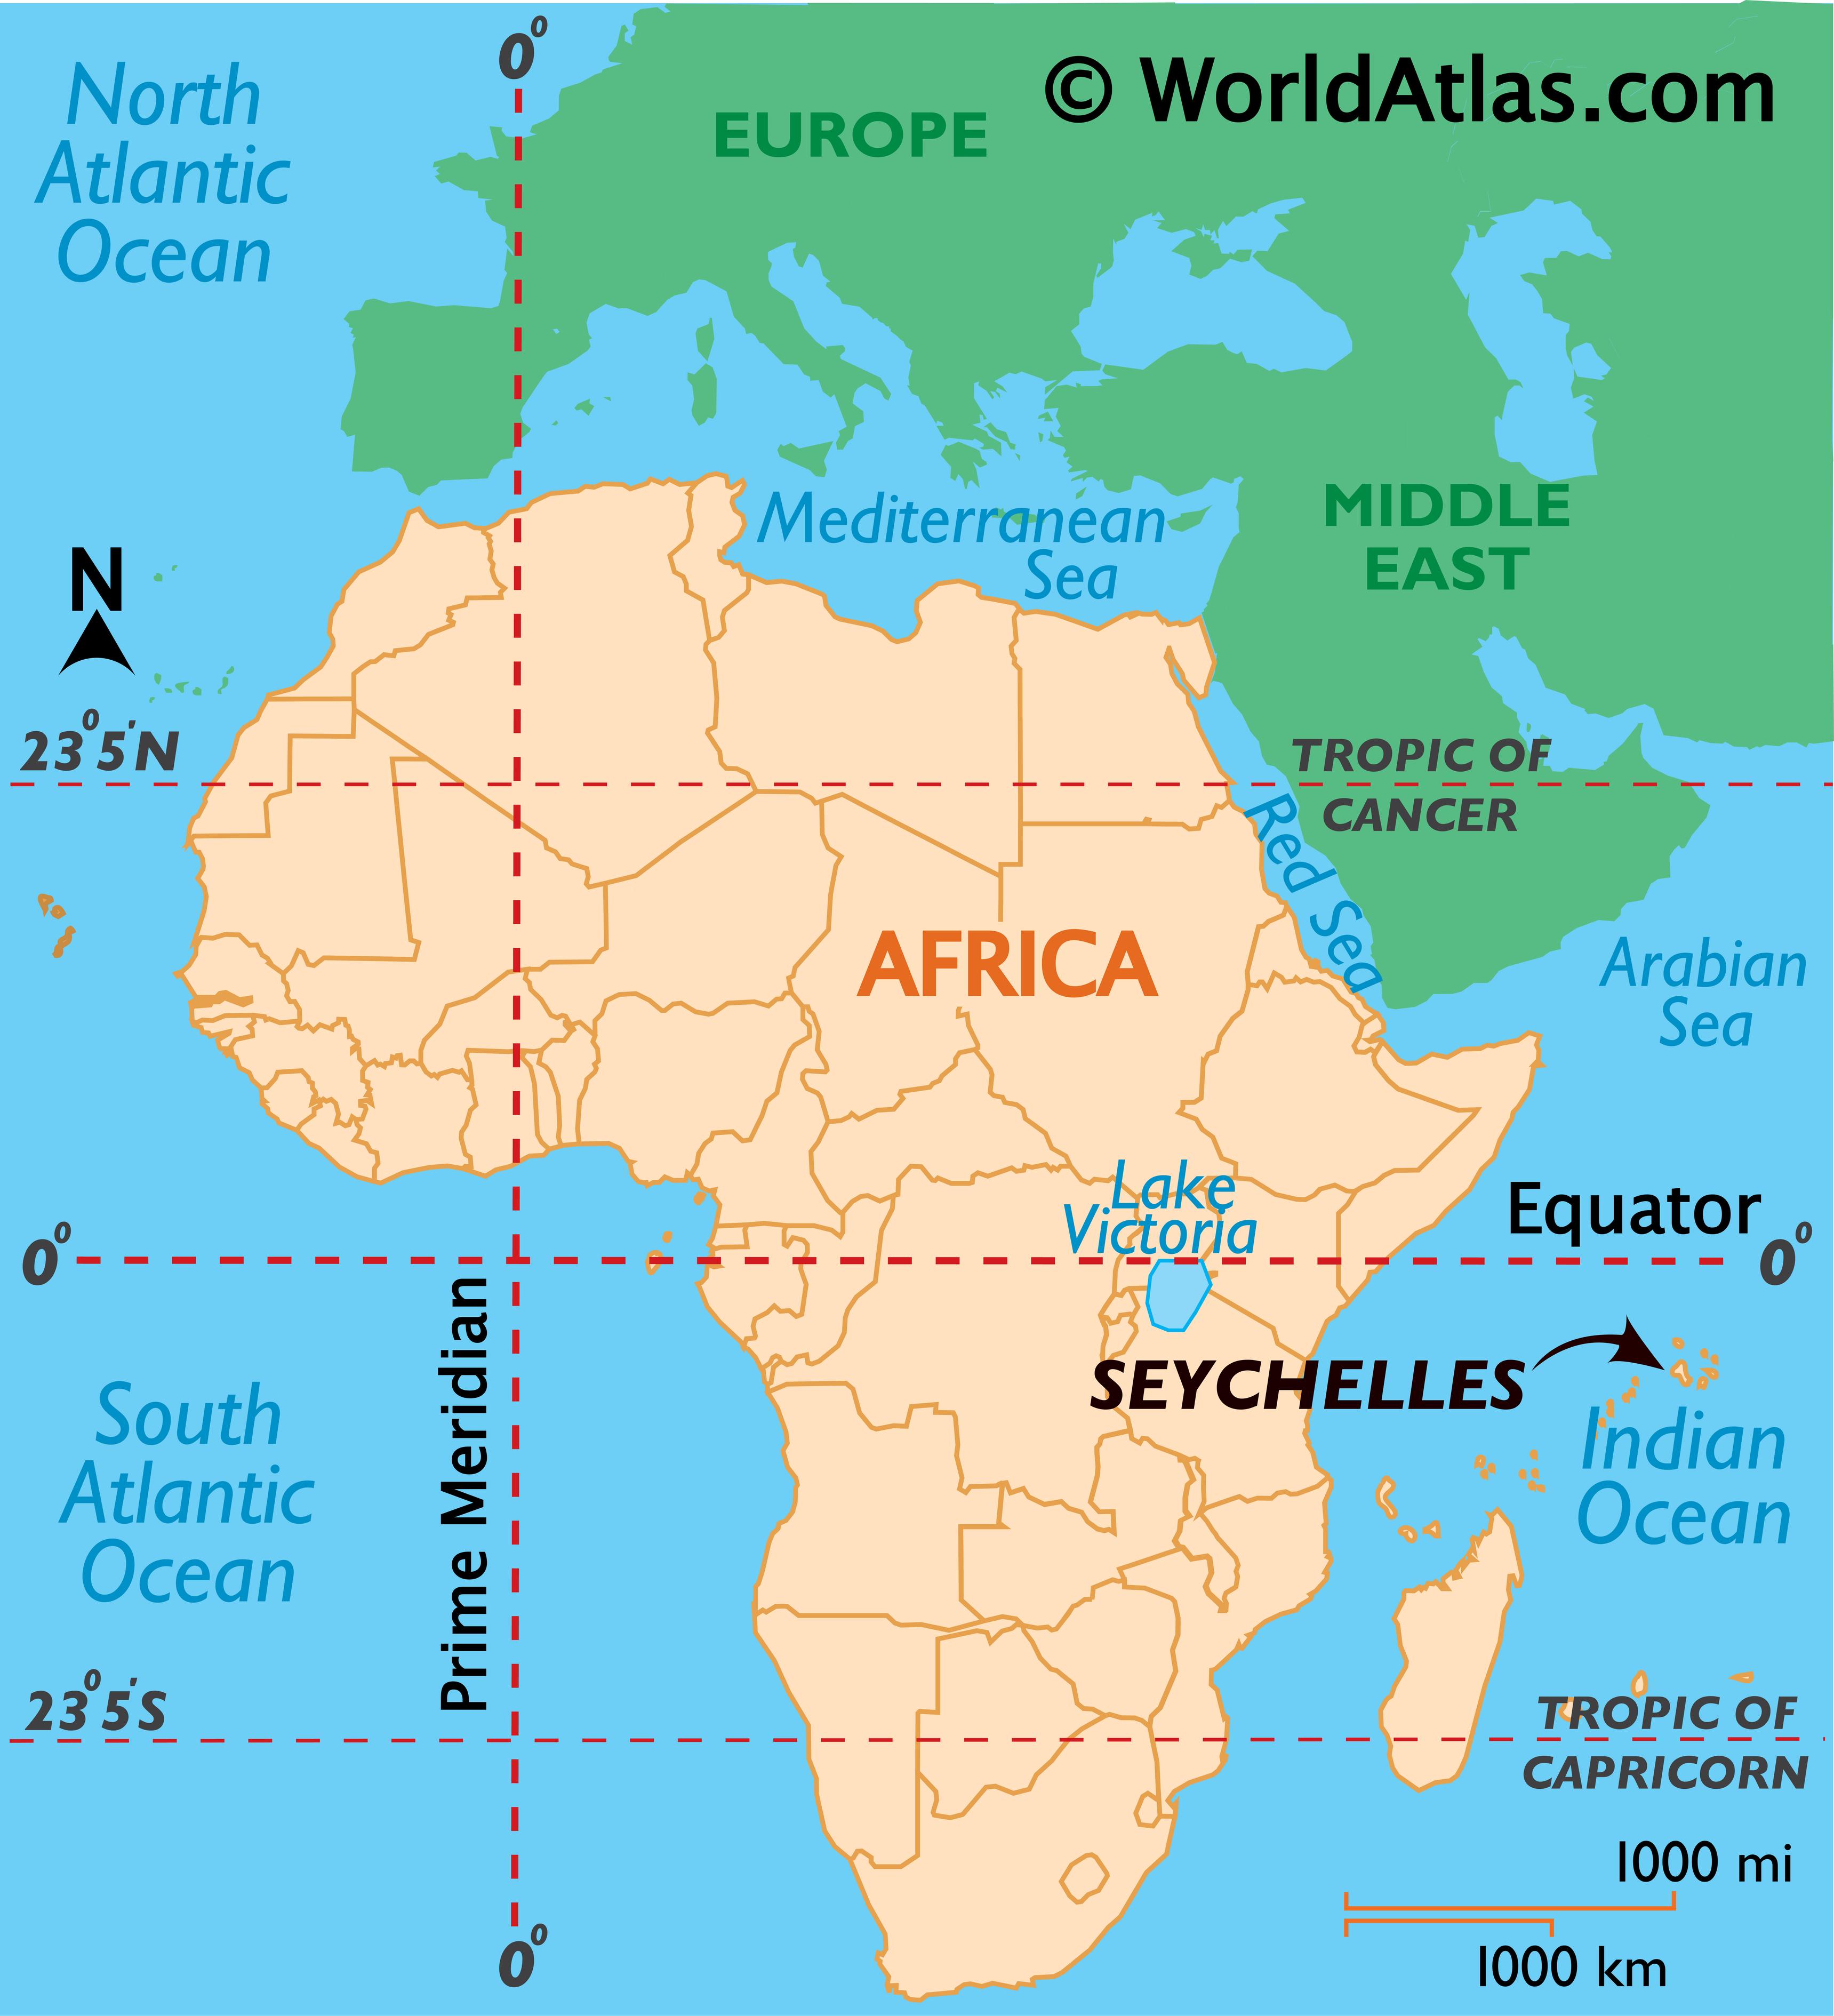 Seychelles Maps & Facts - World Atlas